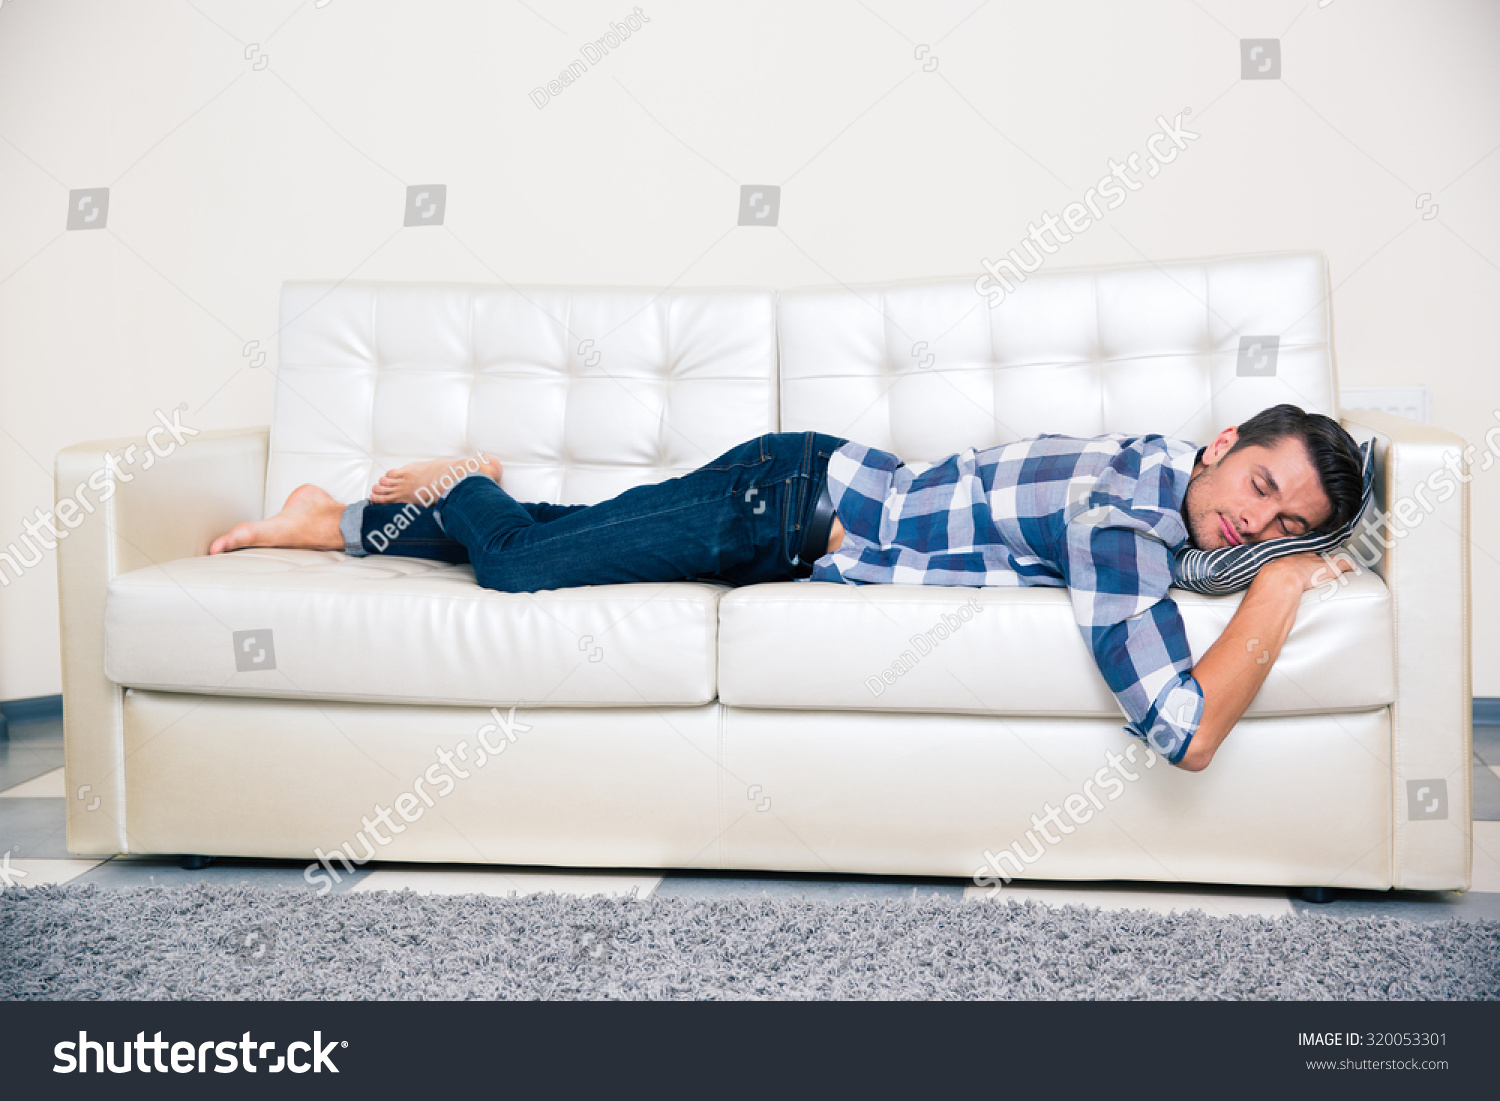 Проще лежать на диване. Человек на диване. Спящий парень на диване. Человек лежит на диване. Человек лежит на спине на диване.